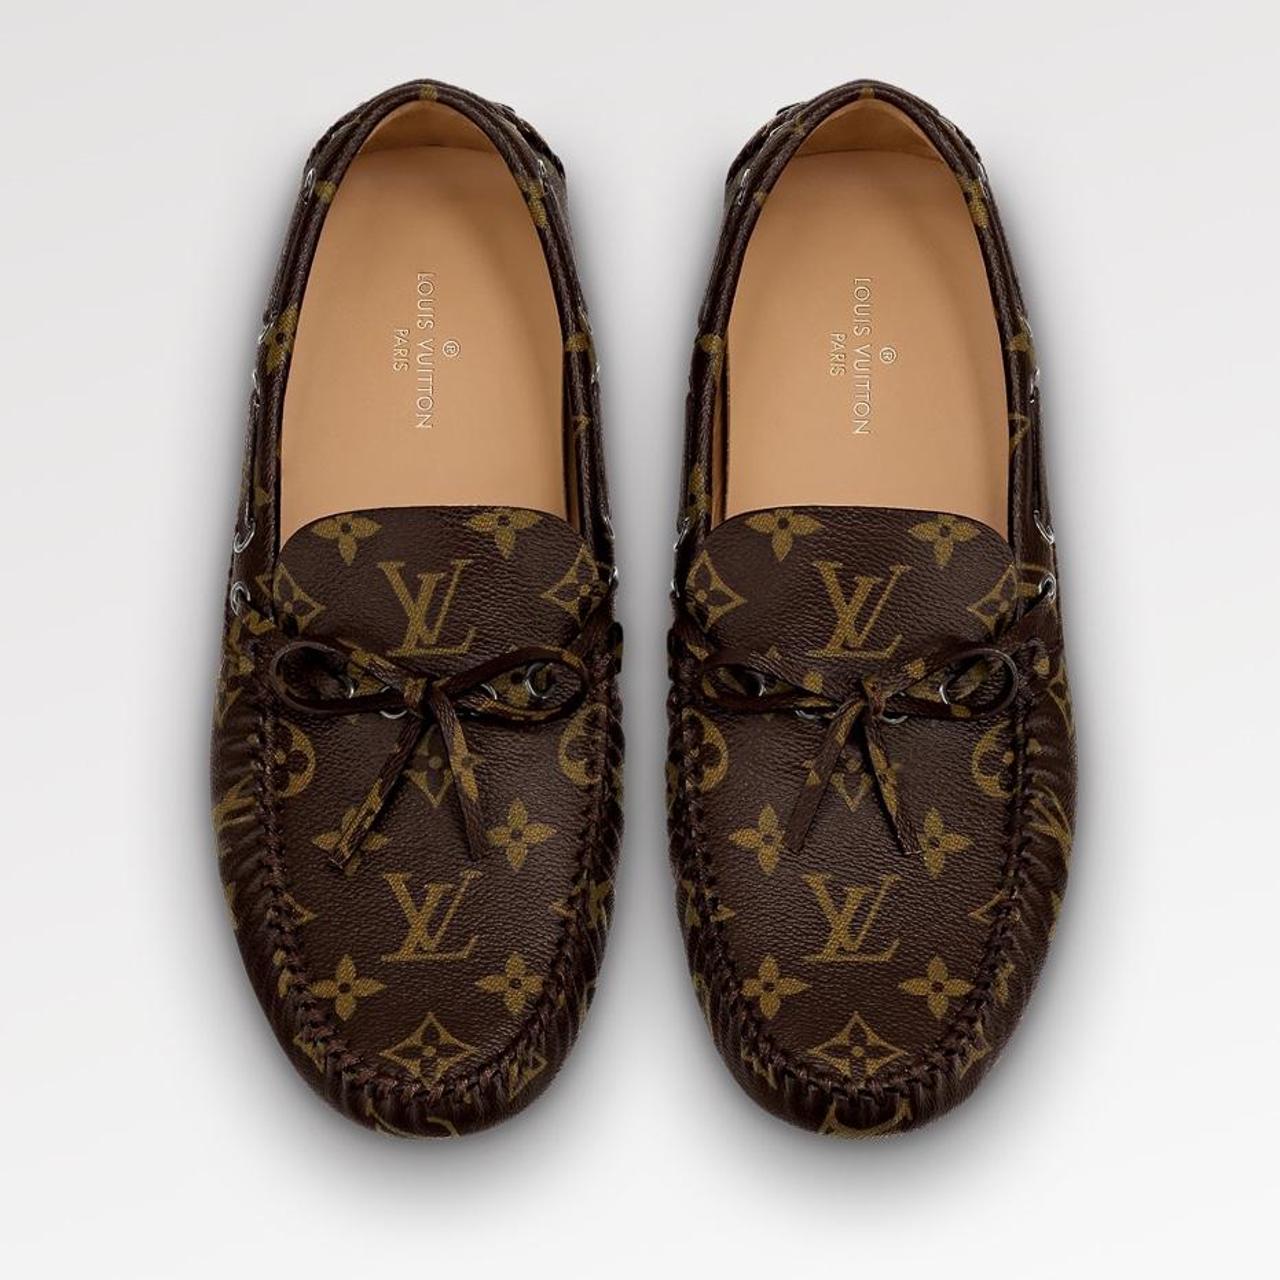 Lv shoes / lv Arizona moccasin